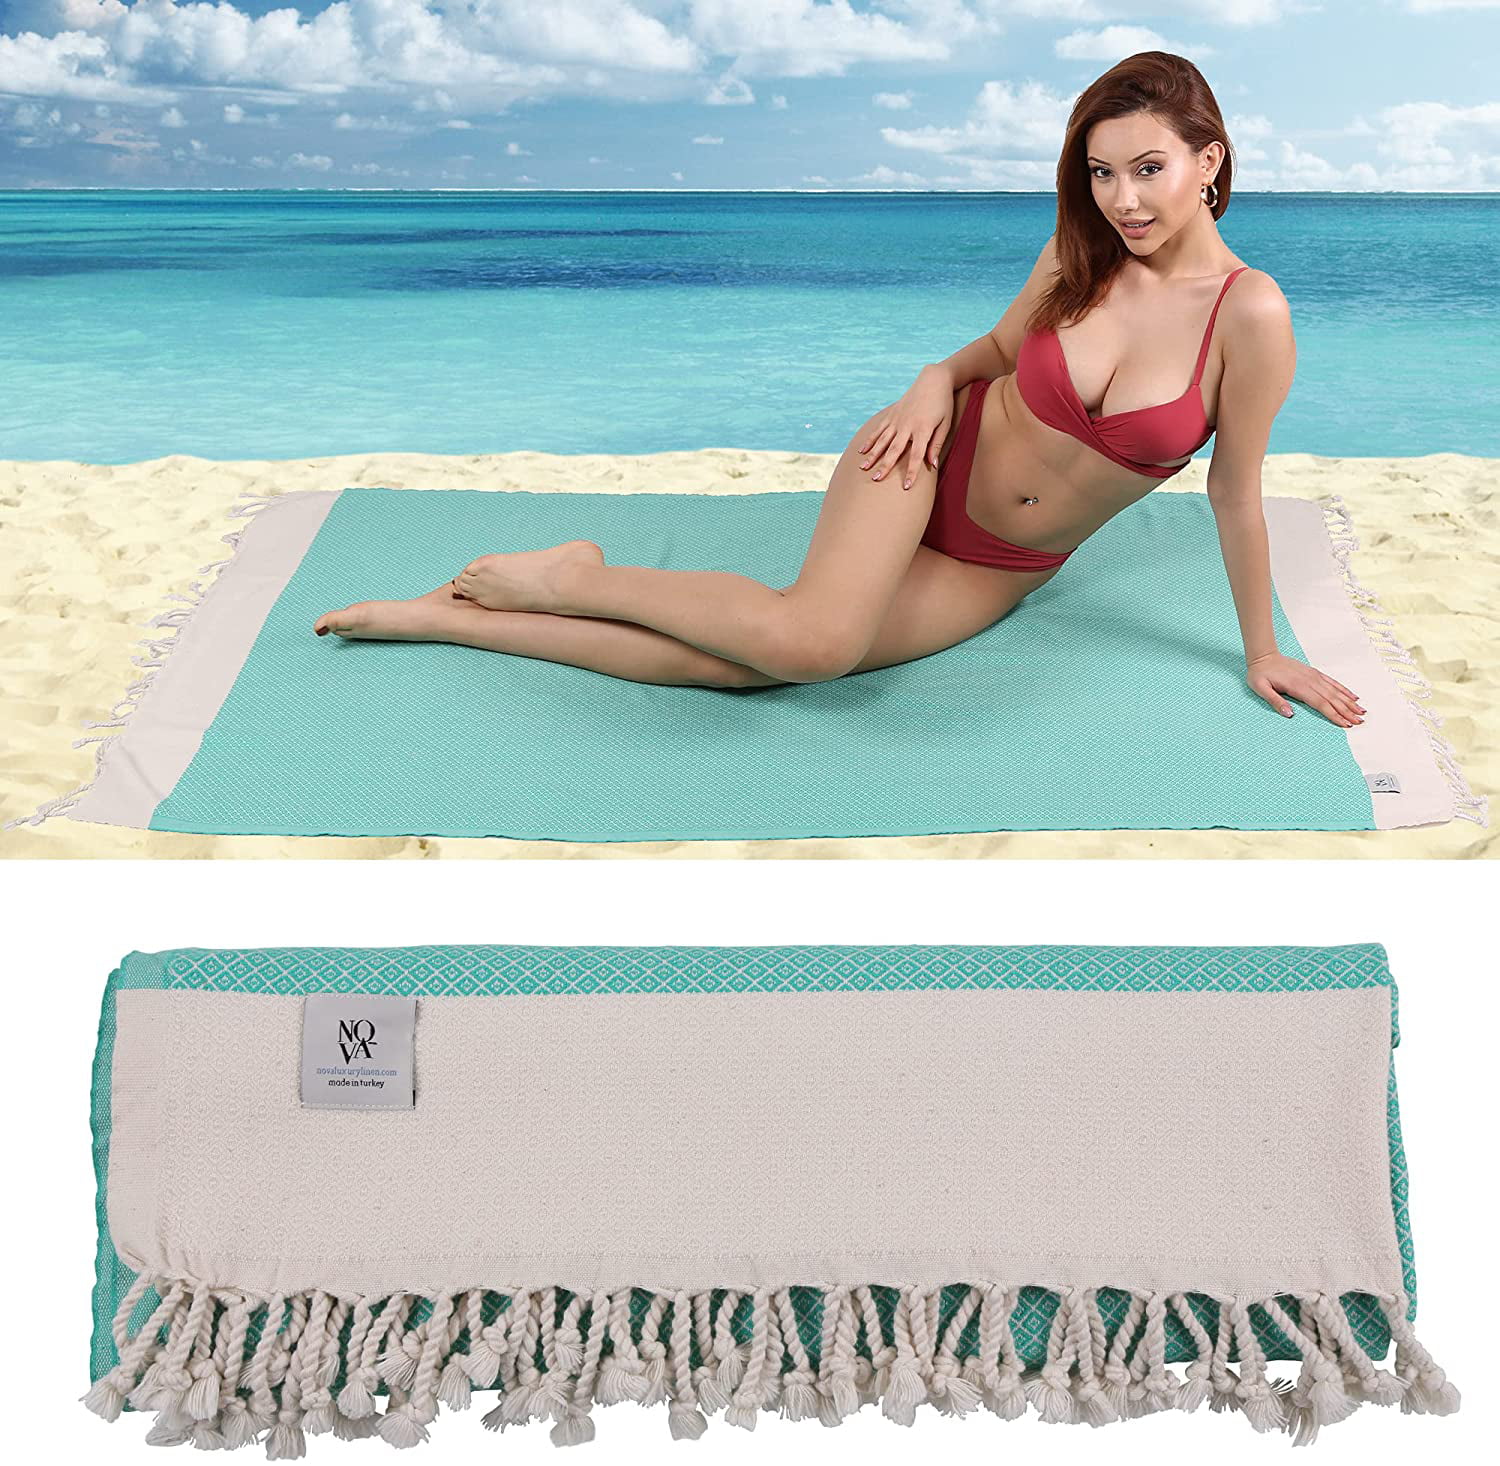 Turkish Luxury Towel - Bath and Beach Peshtemal - Oversized (73X37), Quick  Drying, 100% Cotton, Soft…See more Turkish Luxury Towel - Bath and Beach